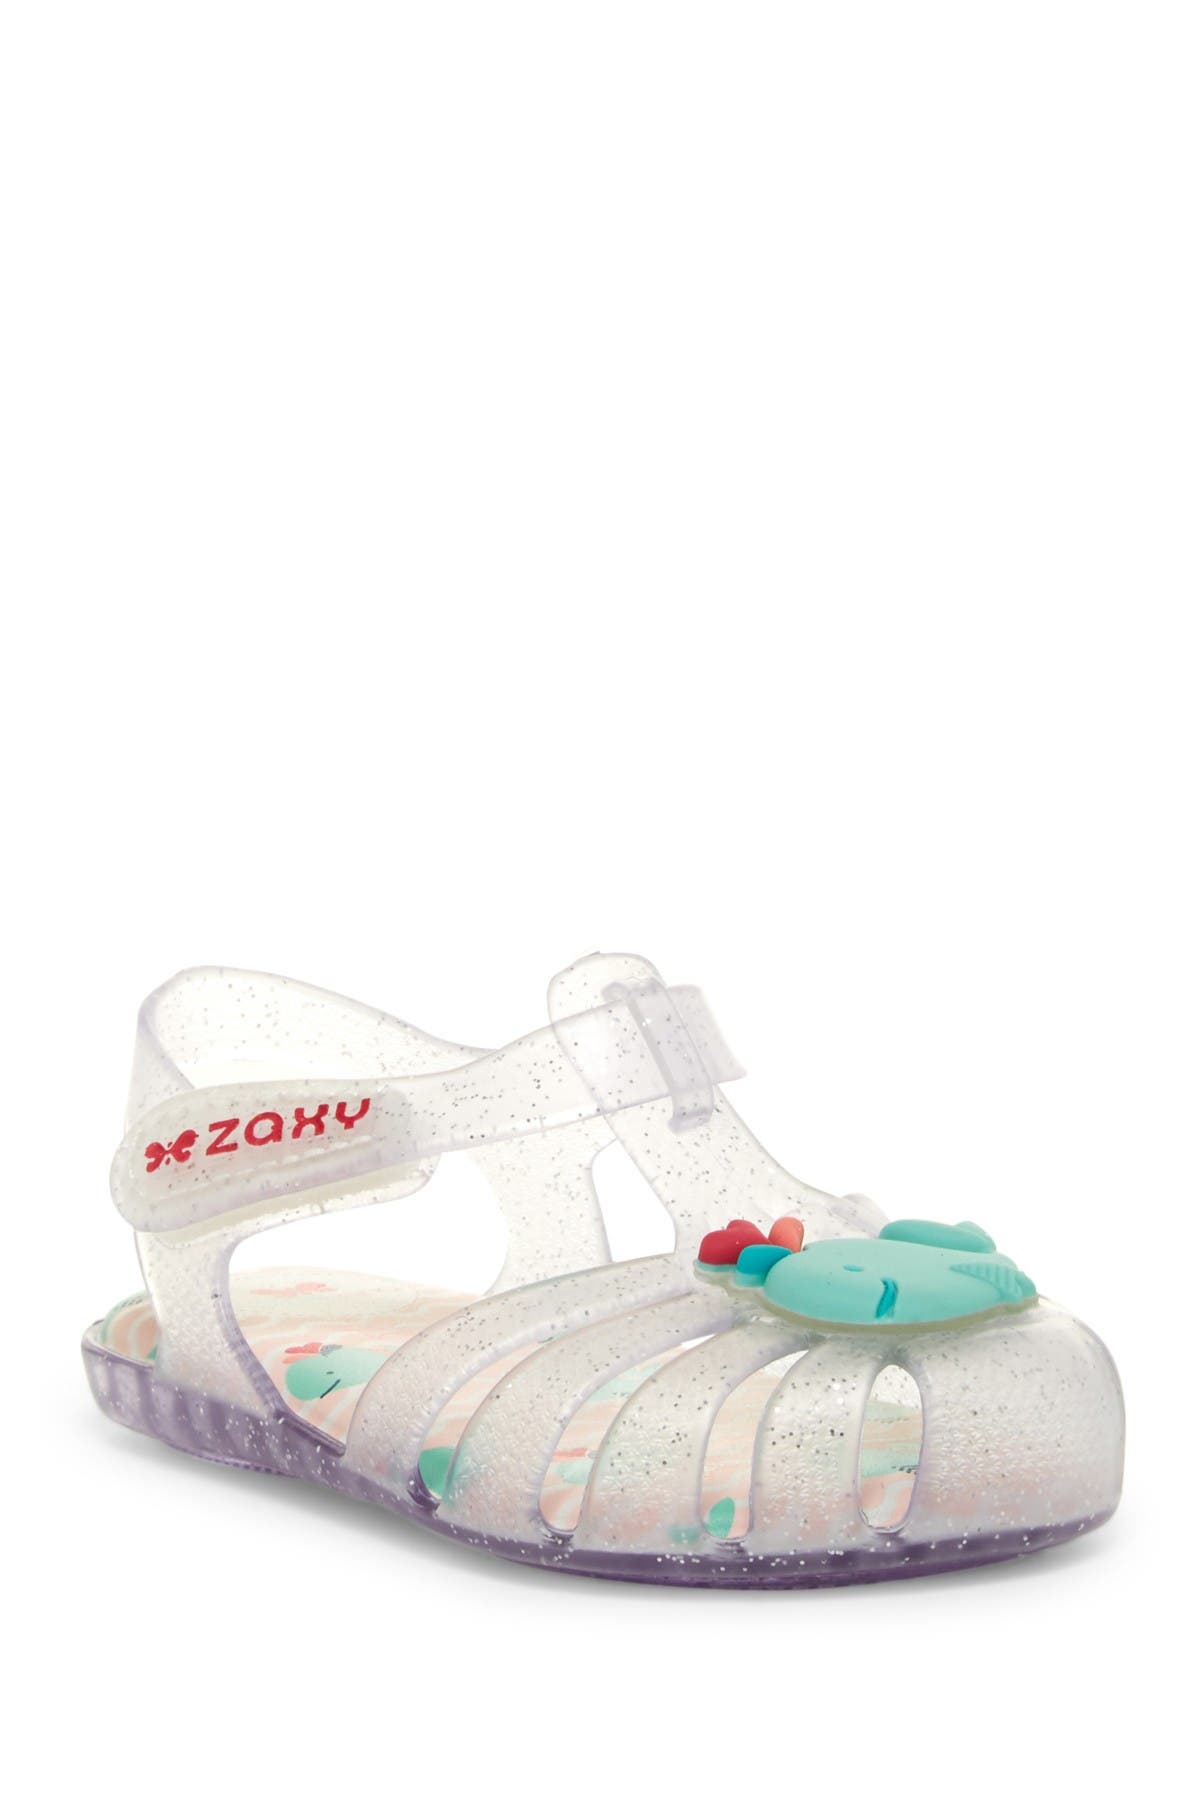 zaxy jelly shoes